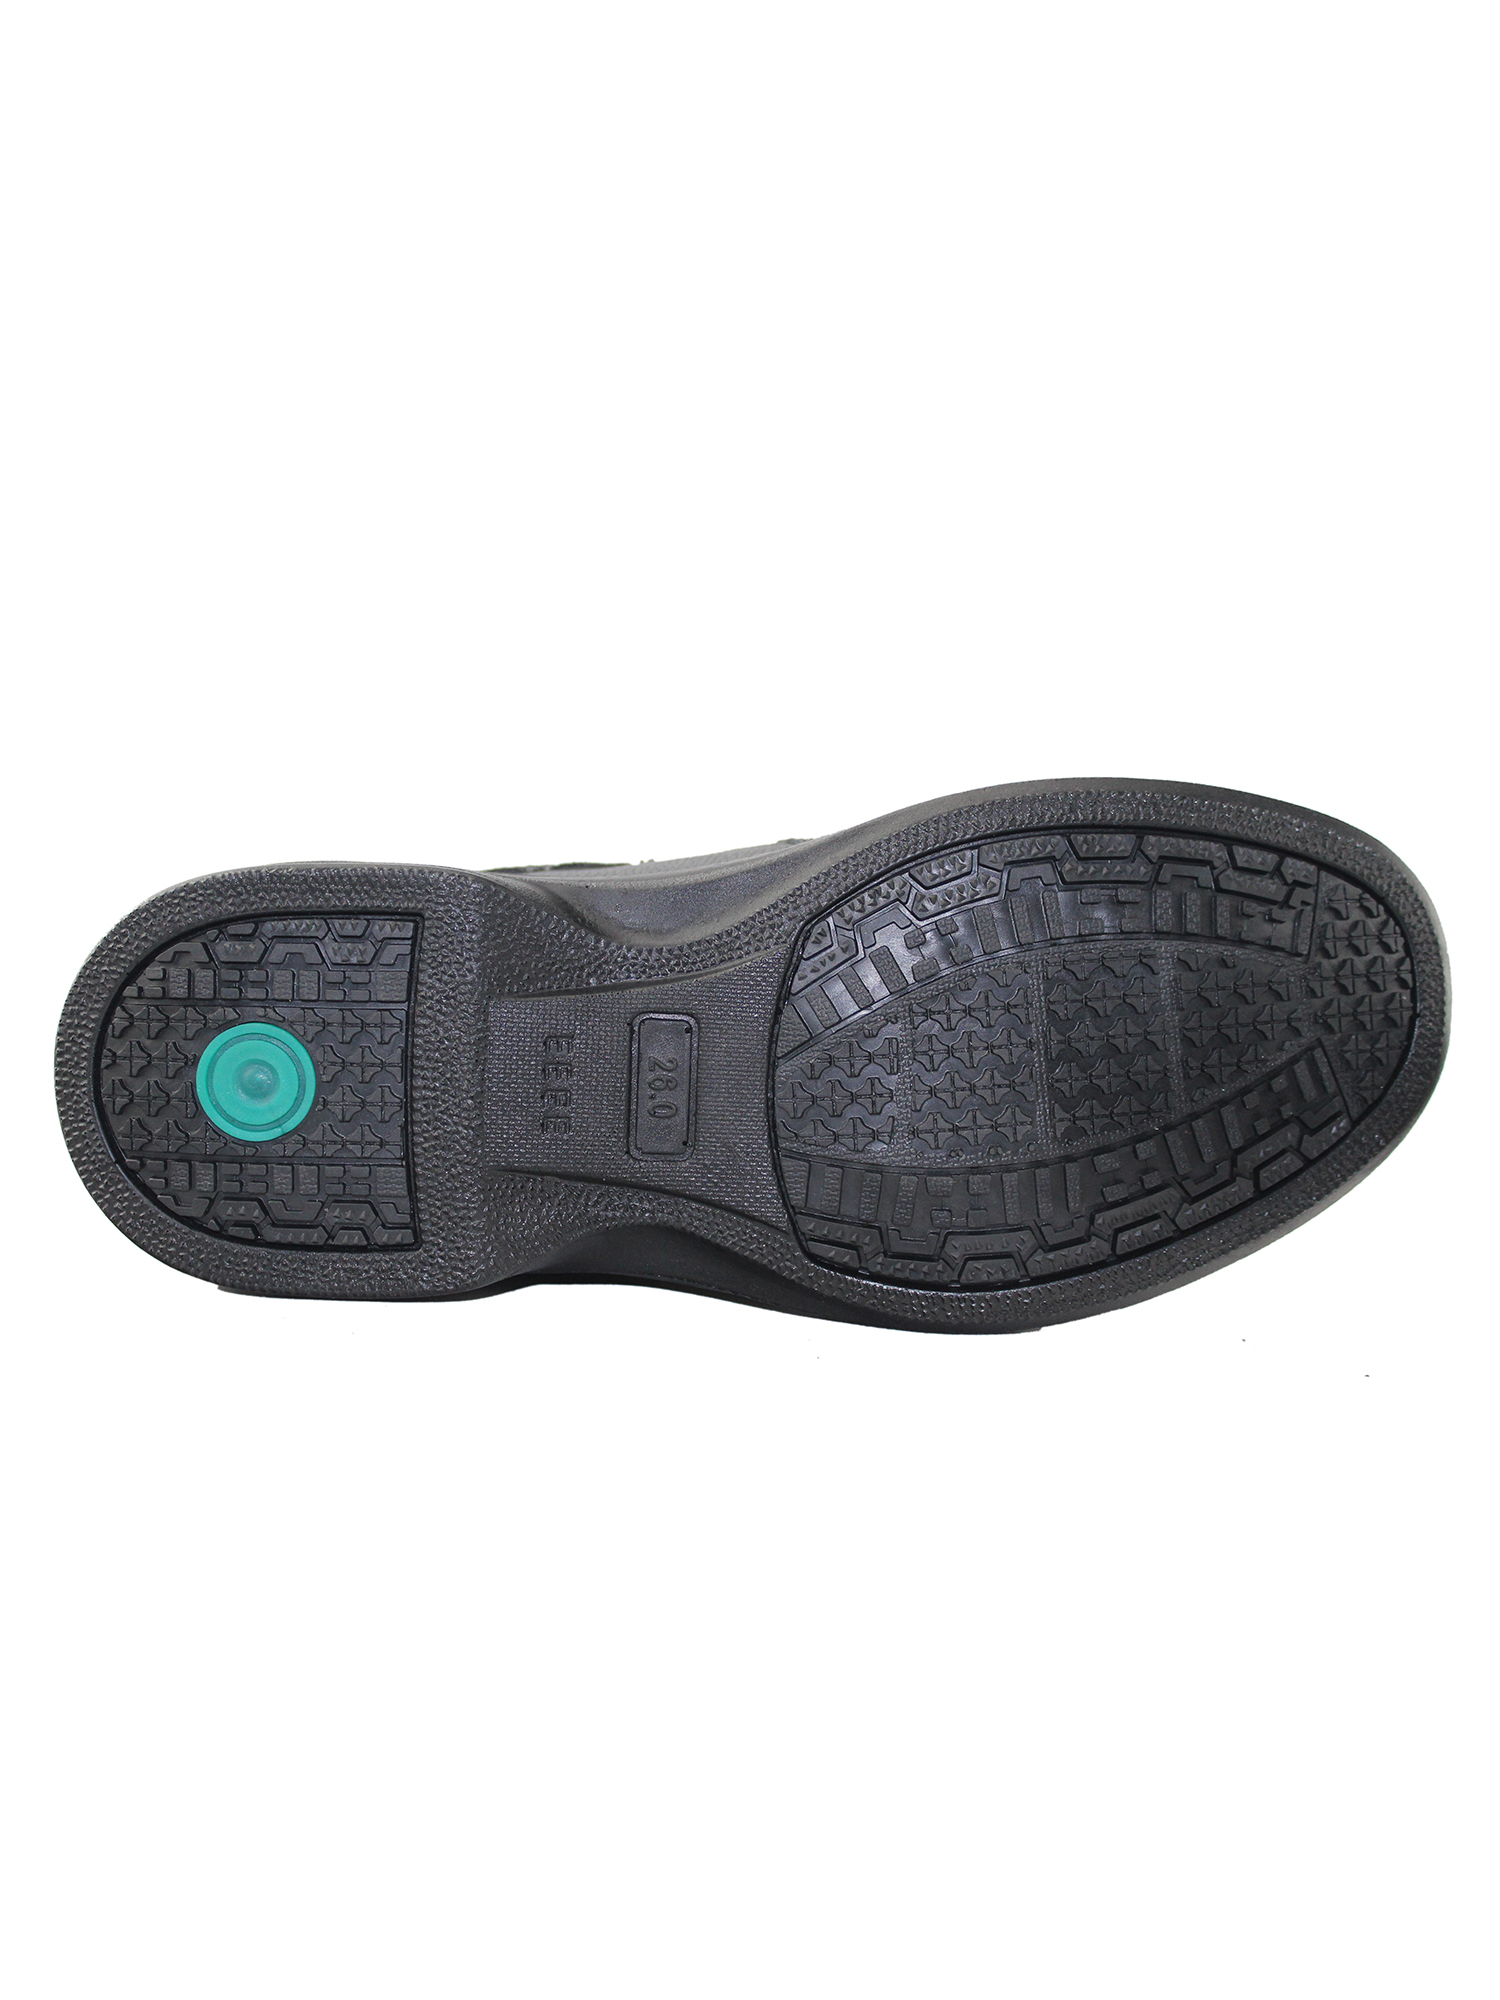 Tanleewa Men's Leather Work Shoes Anti-slip Waterproof Pull-on Casual Dress Shoe Size 10.5 - image 2 of 5